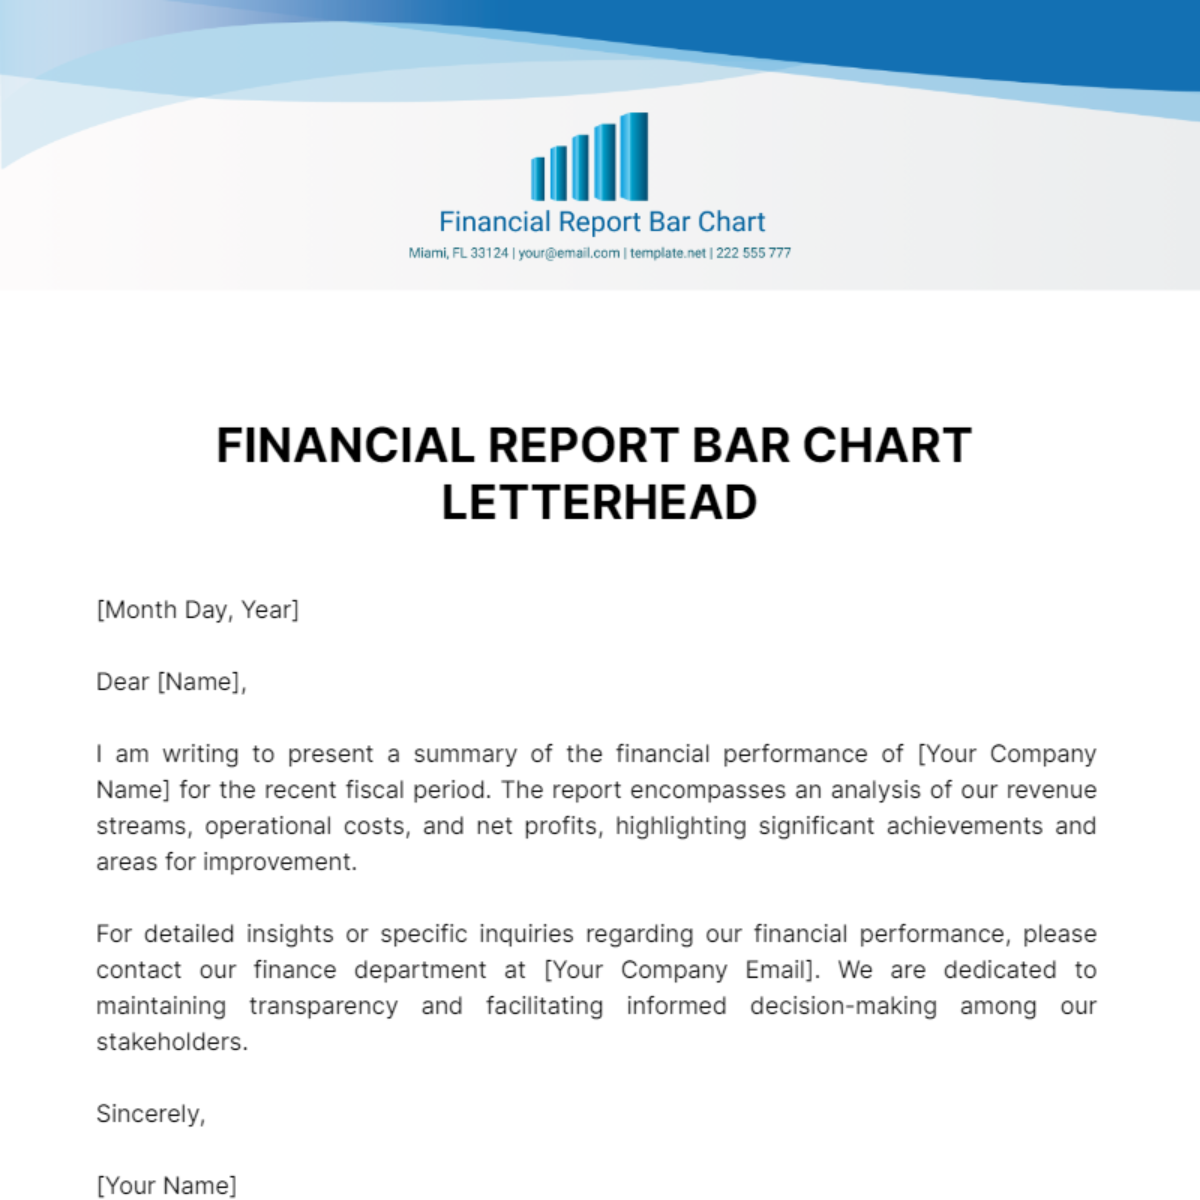 Free Financial Report Bar Chart Letterhead Template